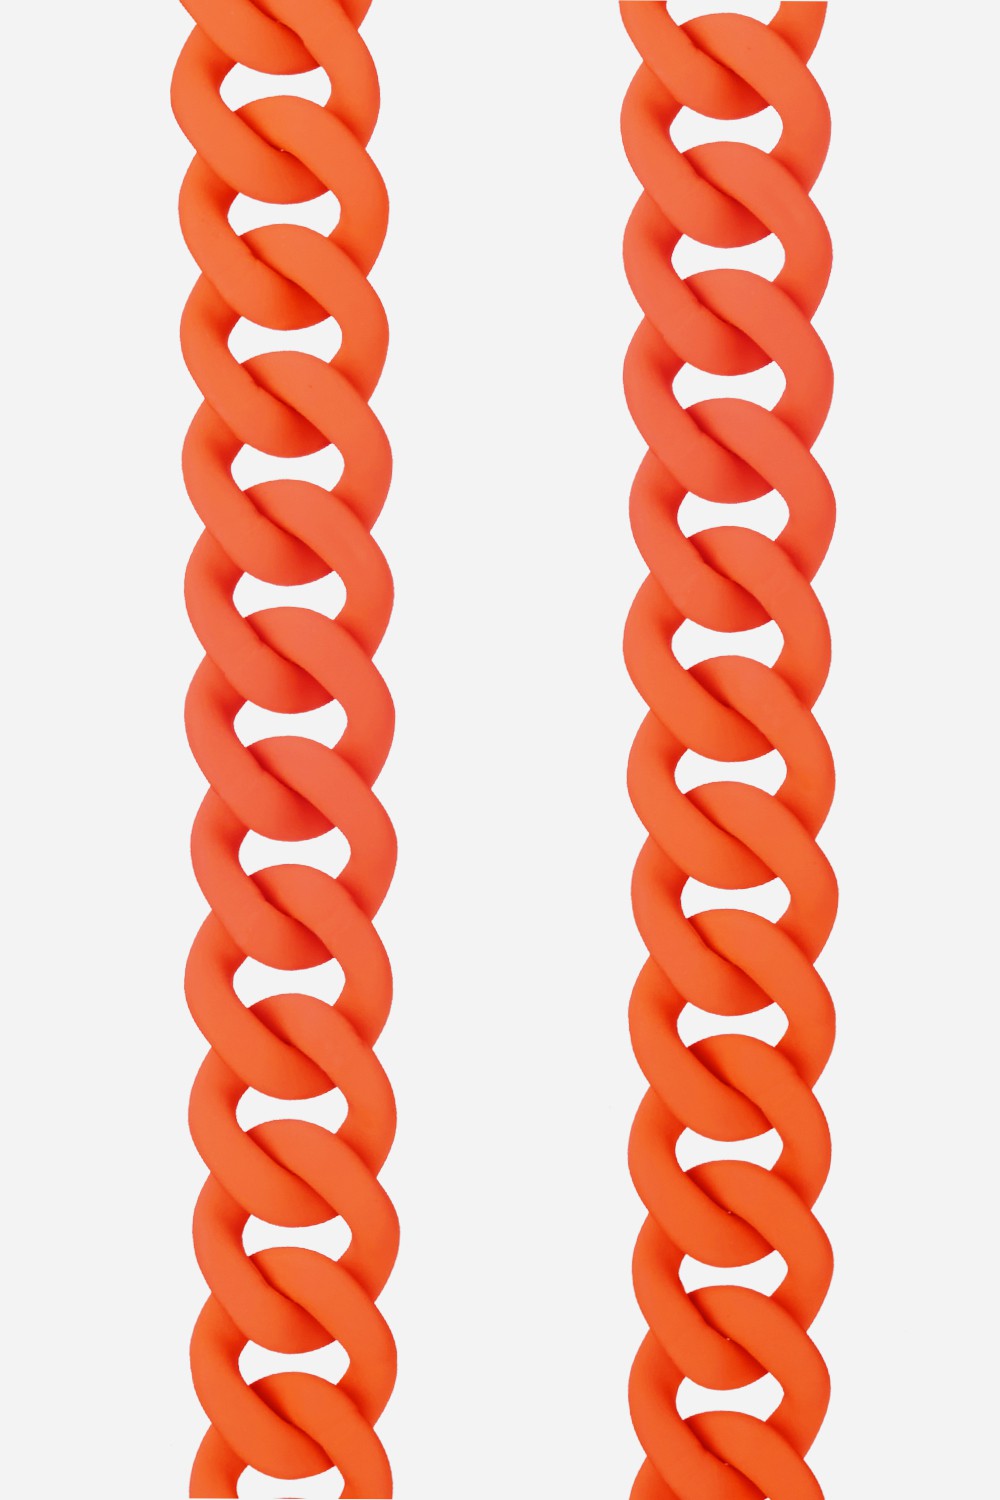 Alice Orange Long Chain 120 cm